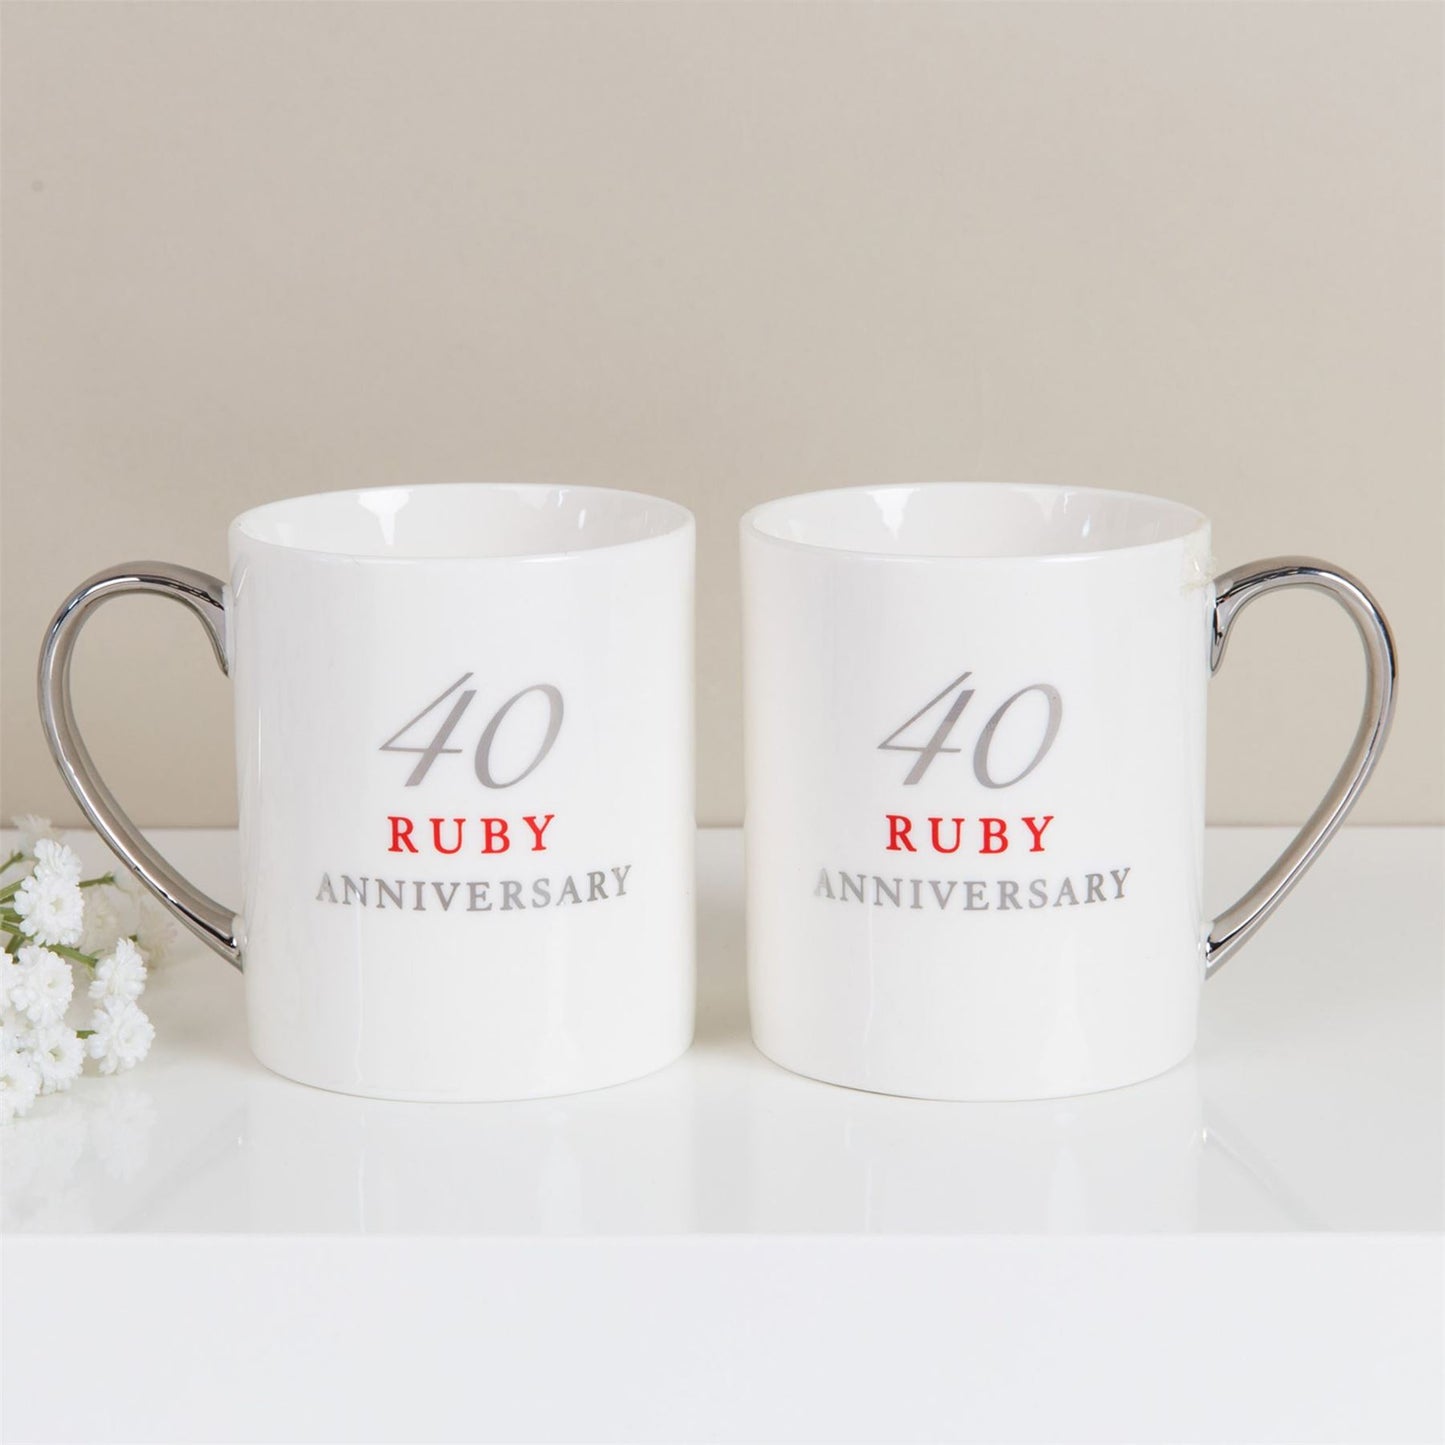 Amore Set of 2 Porcelain Mugs - 40th Anniversary